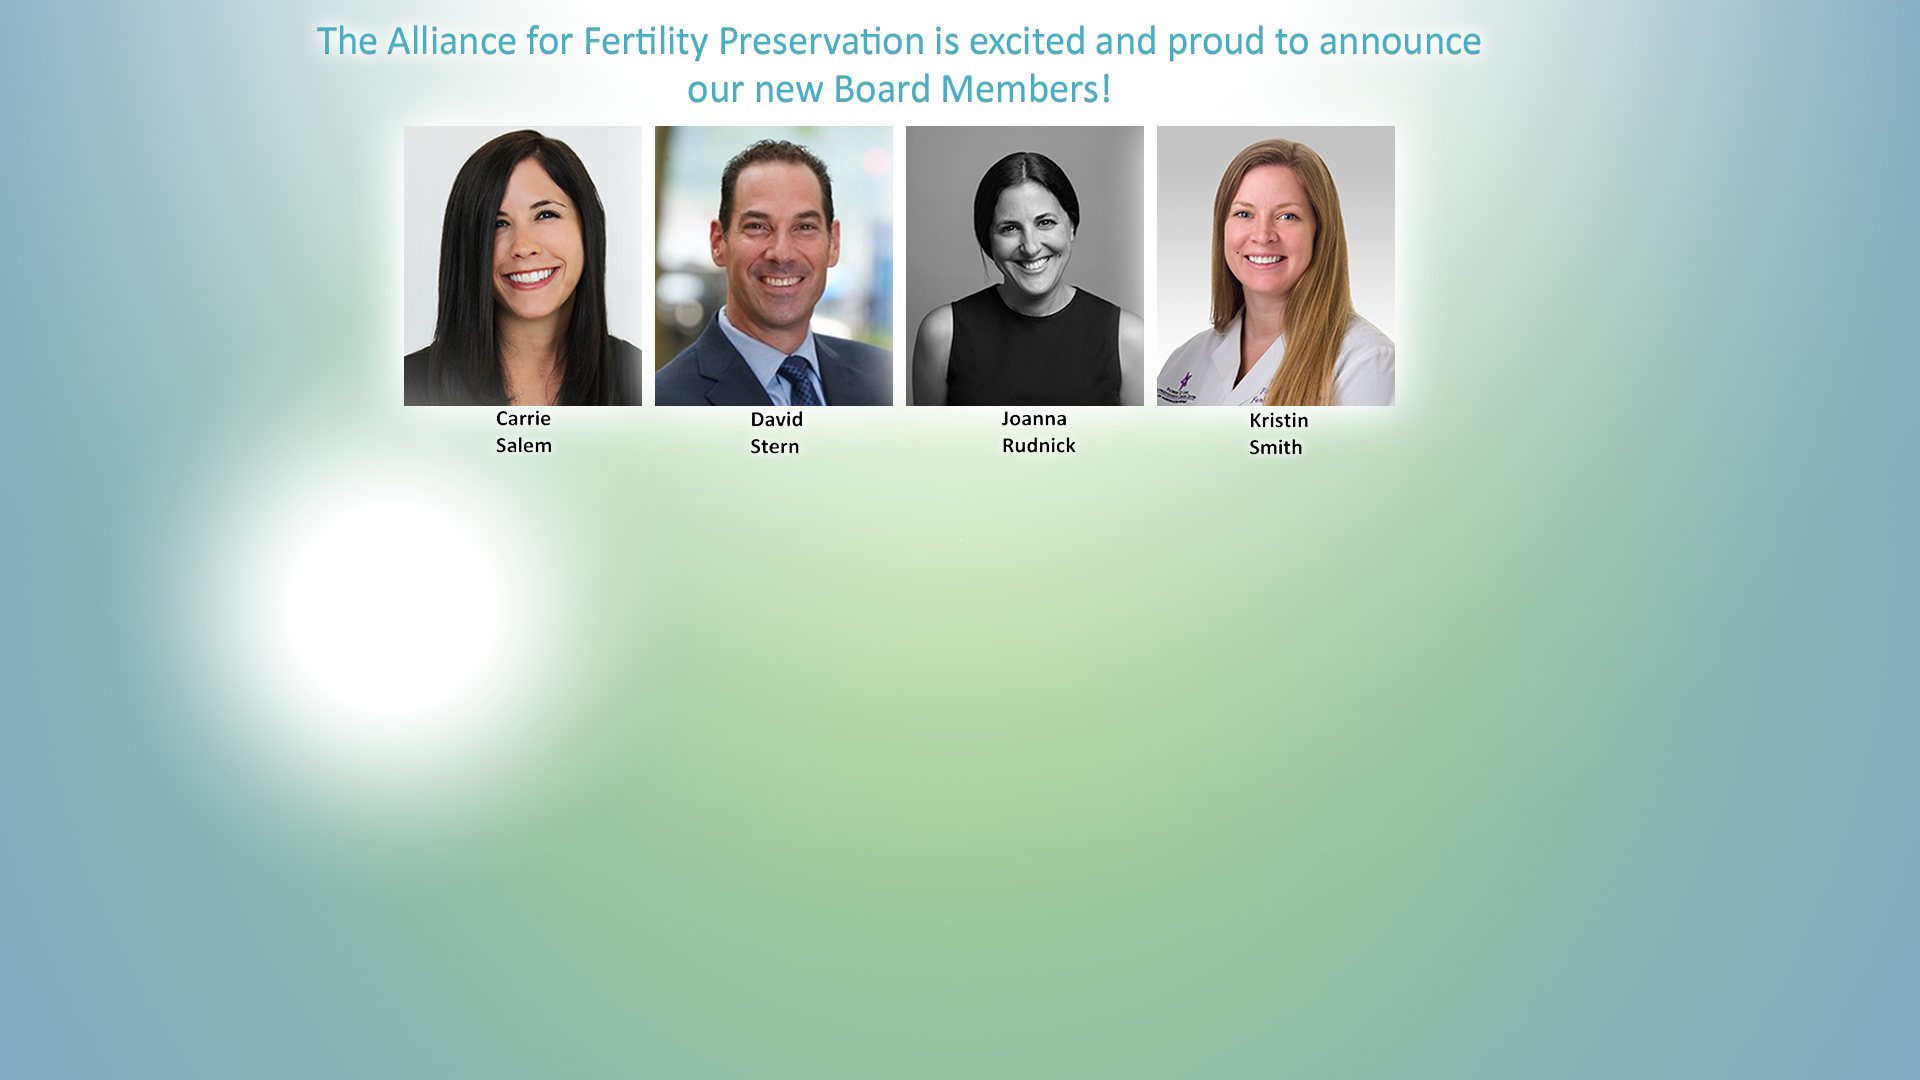 New Alliance for Fertility Preservation Board Members